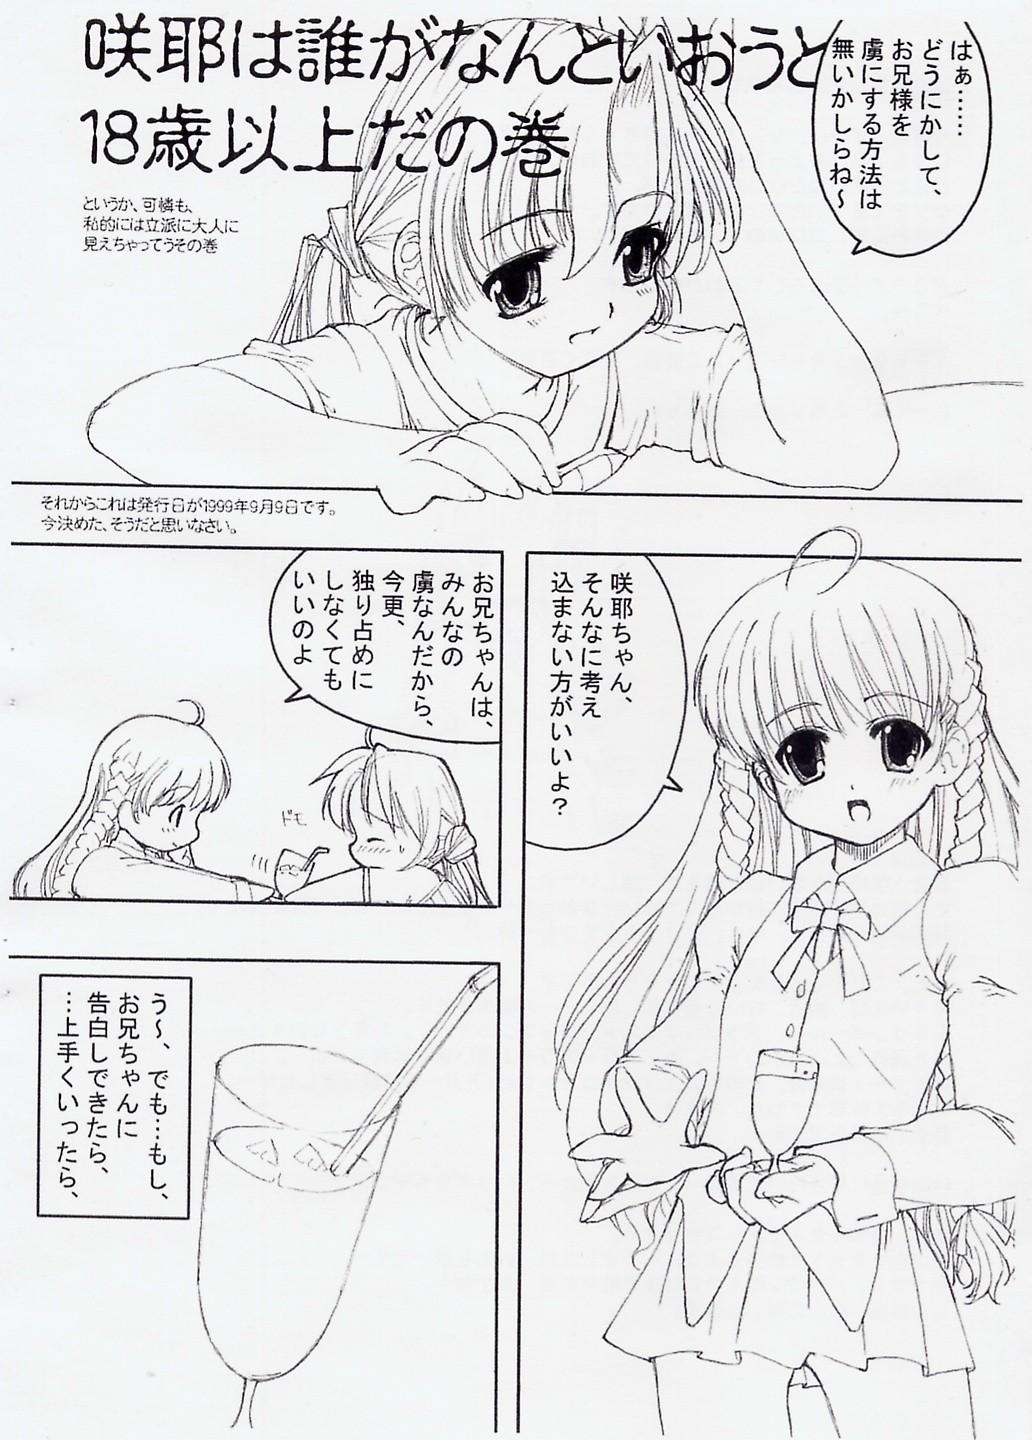 8teenxxx Sakuya's Note - Sister princess Milf Cougar - Page 3